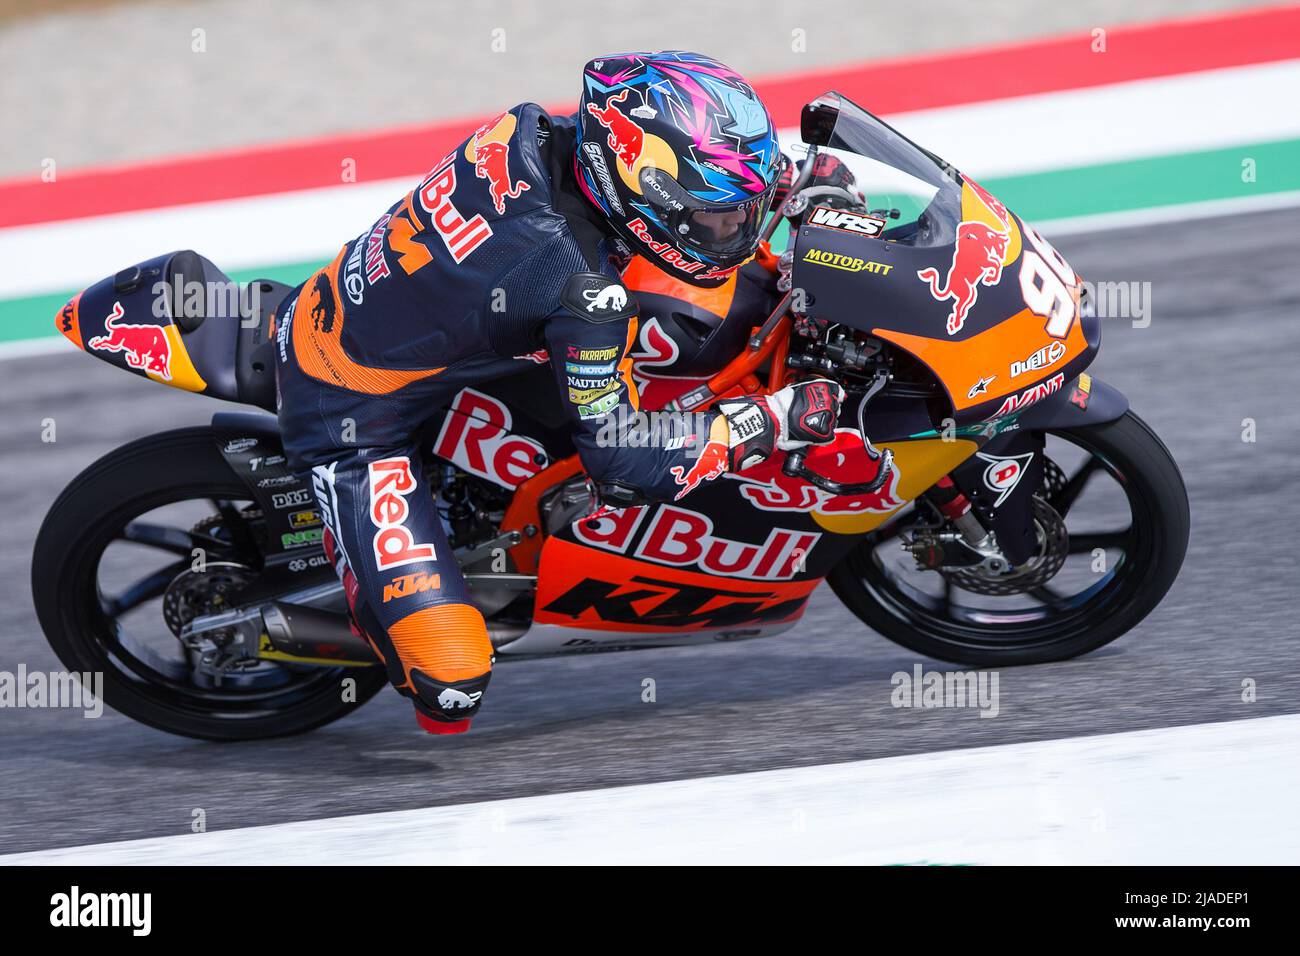 96 Holgado Daniel (Red Bull Ktm Ajo) Moto3 during the MotoGP World  Championship Gran Premio d'Italia Oakley Race Moto2, Moto3 on May 29, 2022  at the Mugello International Circuit in Mugello, Italy (